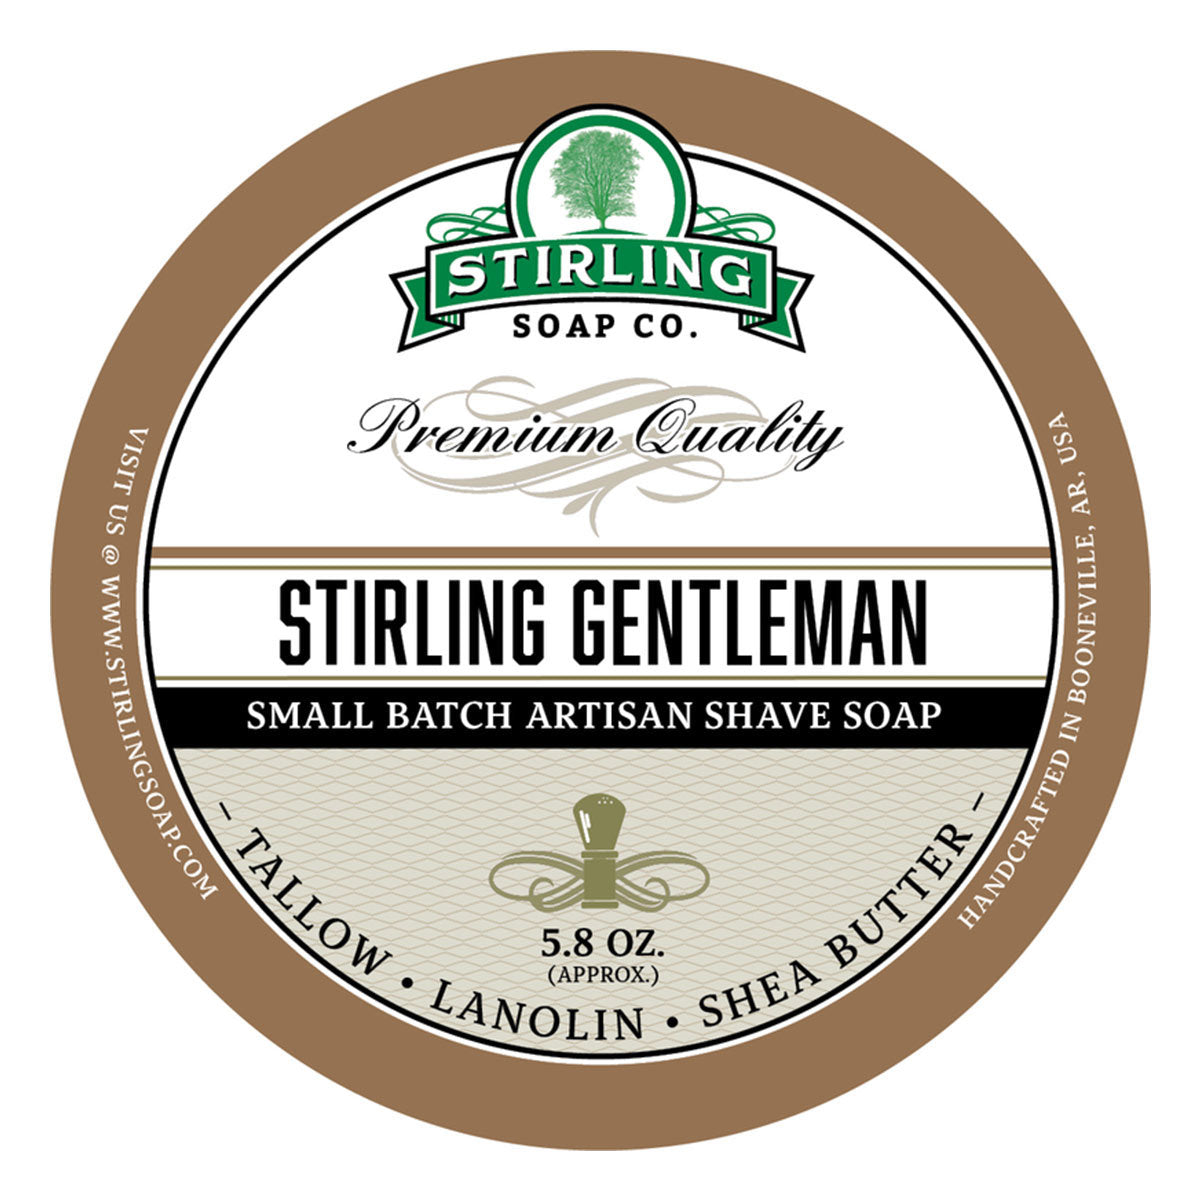 Primary image of Stirling Gentleman Shave Soap